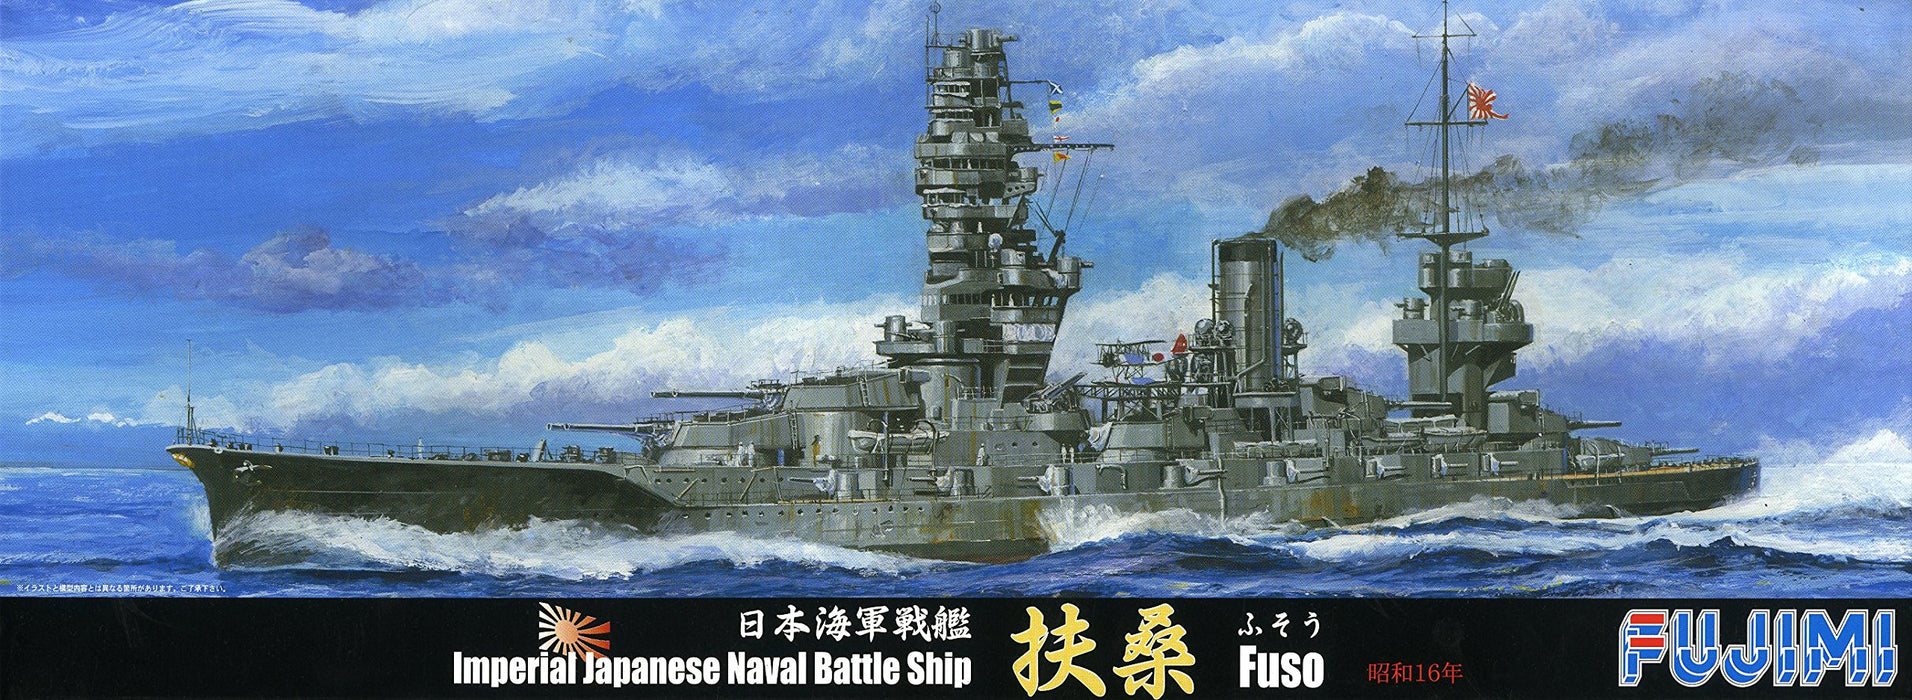 FUJIMI Toku-66 Ijn Imperial Japanese Naval Battle Ship Fuso 1941 Bausatz im Maßstab 1:700